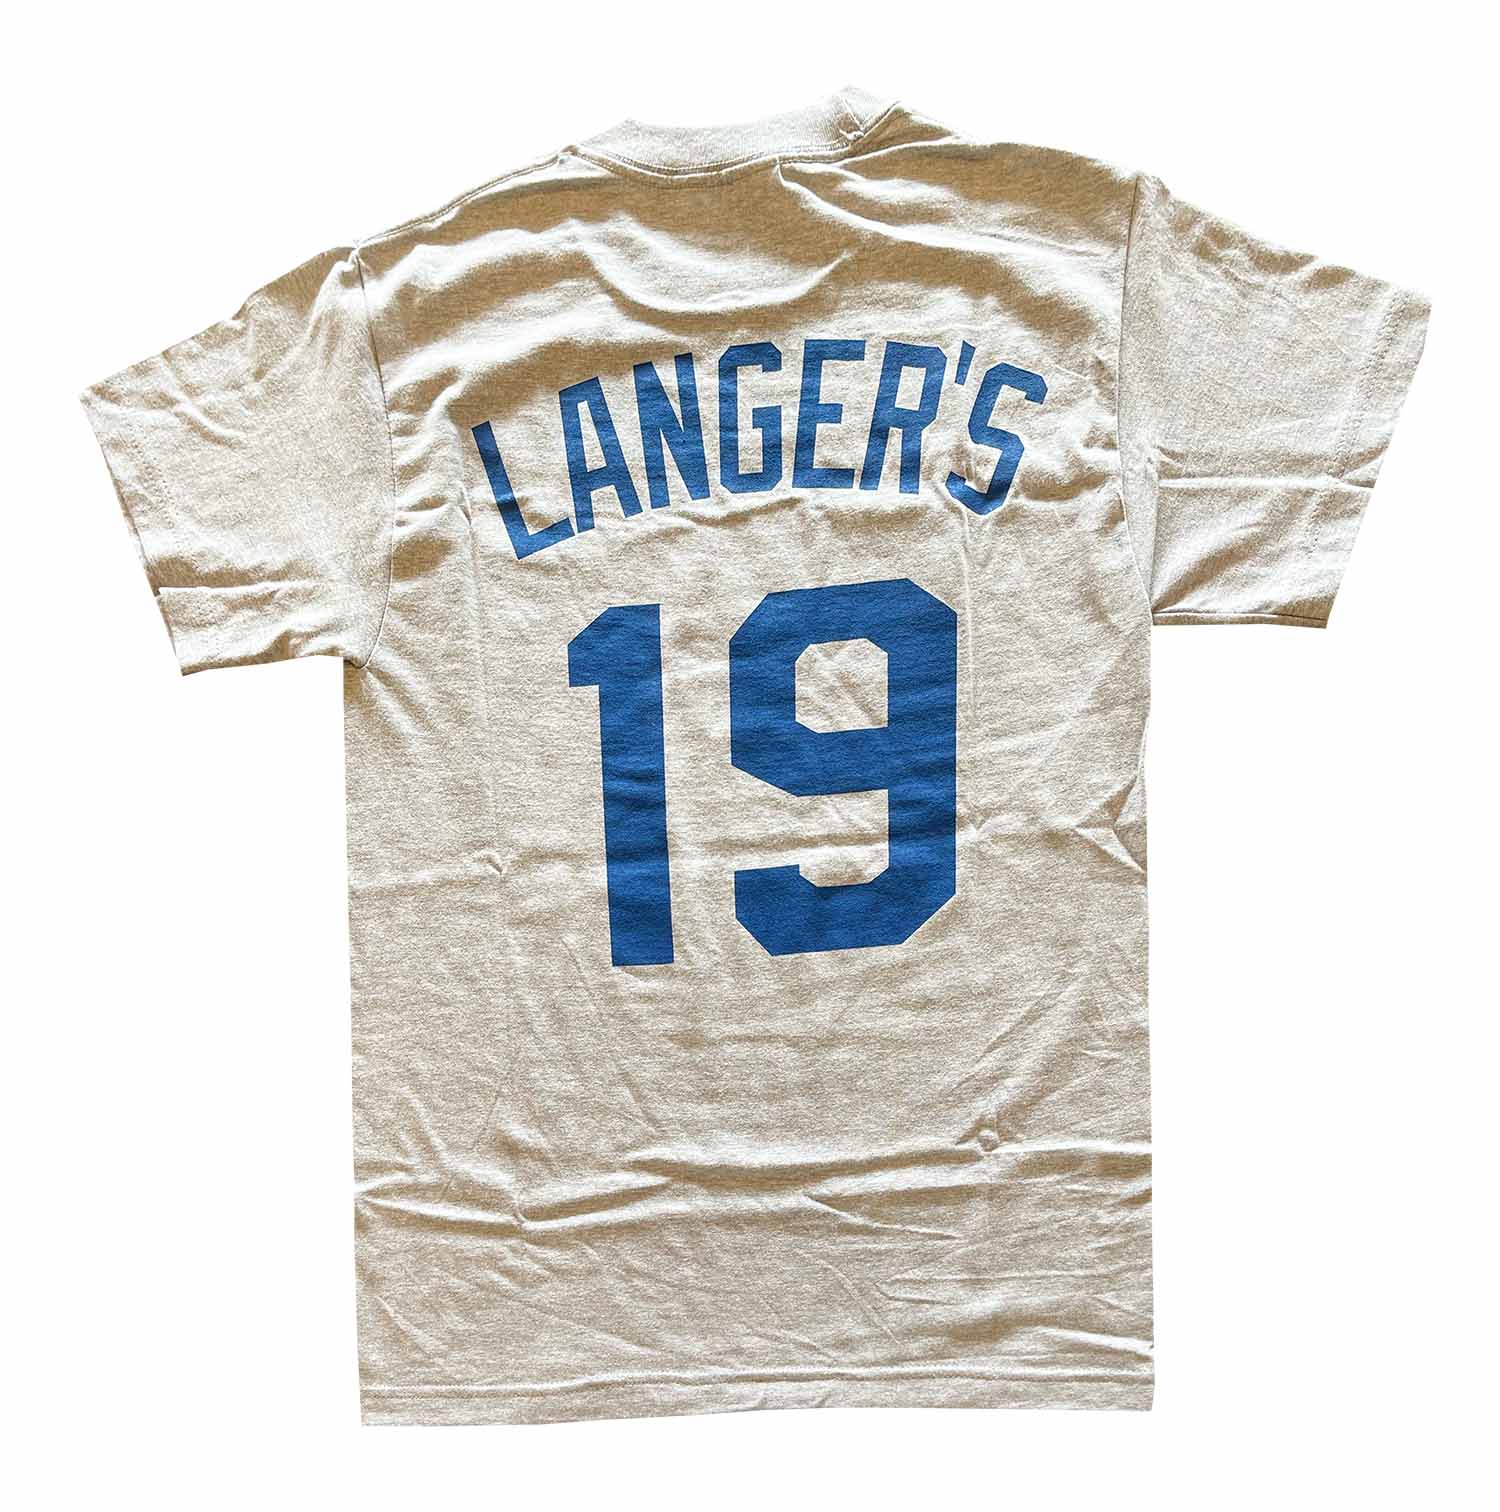 Langer's Dodgers-Style #19 Shirt